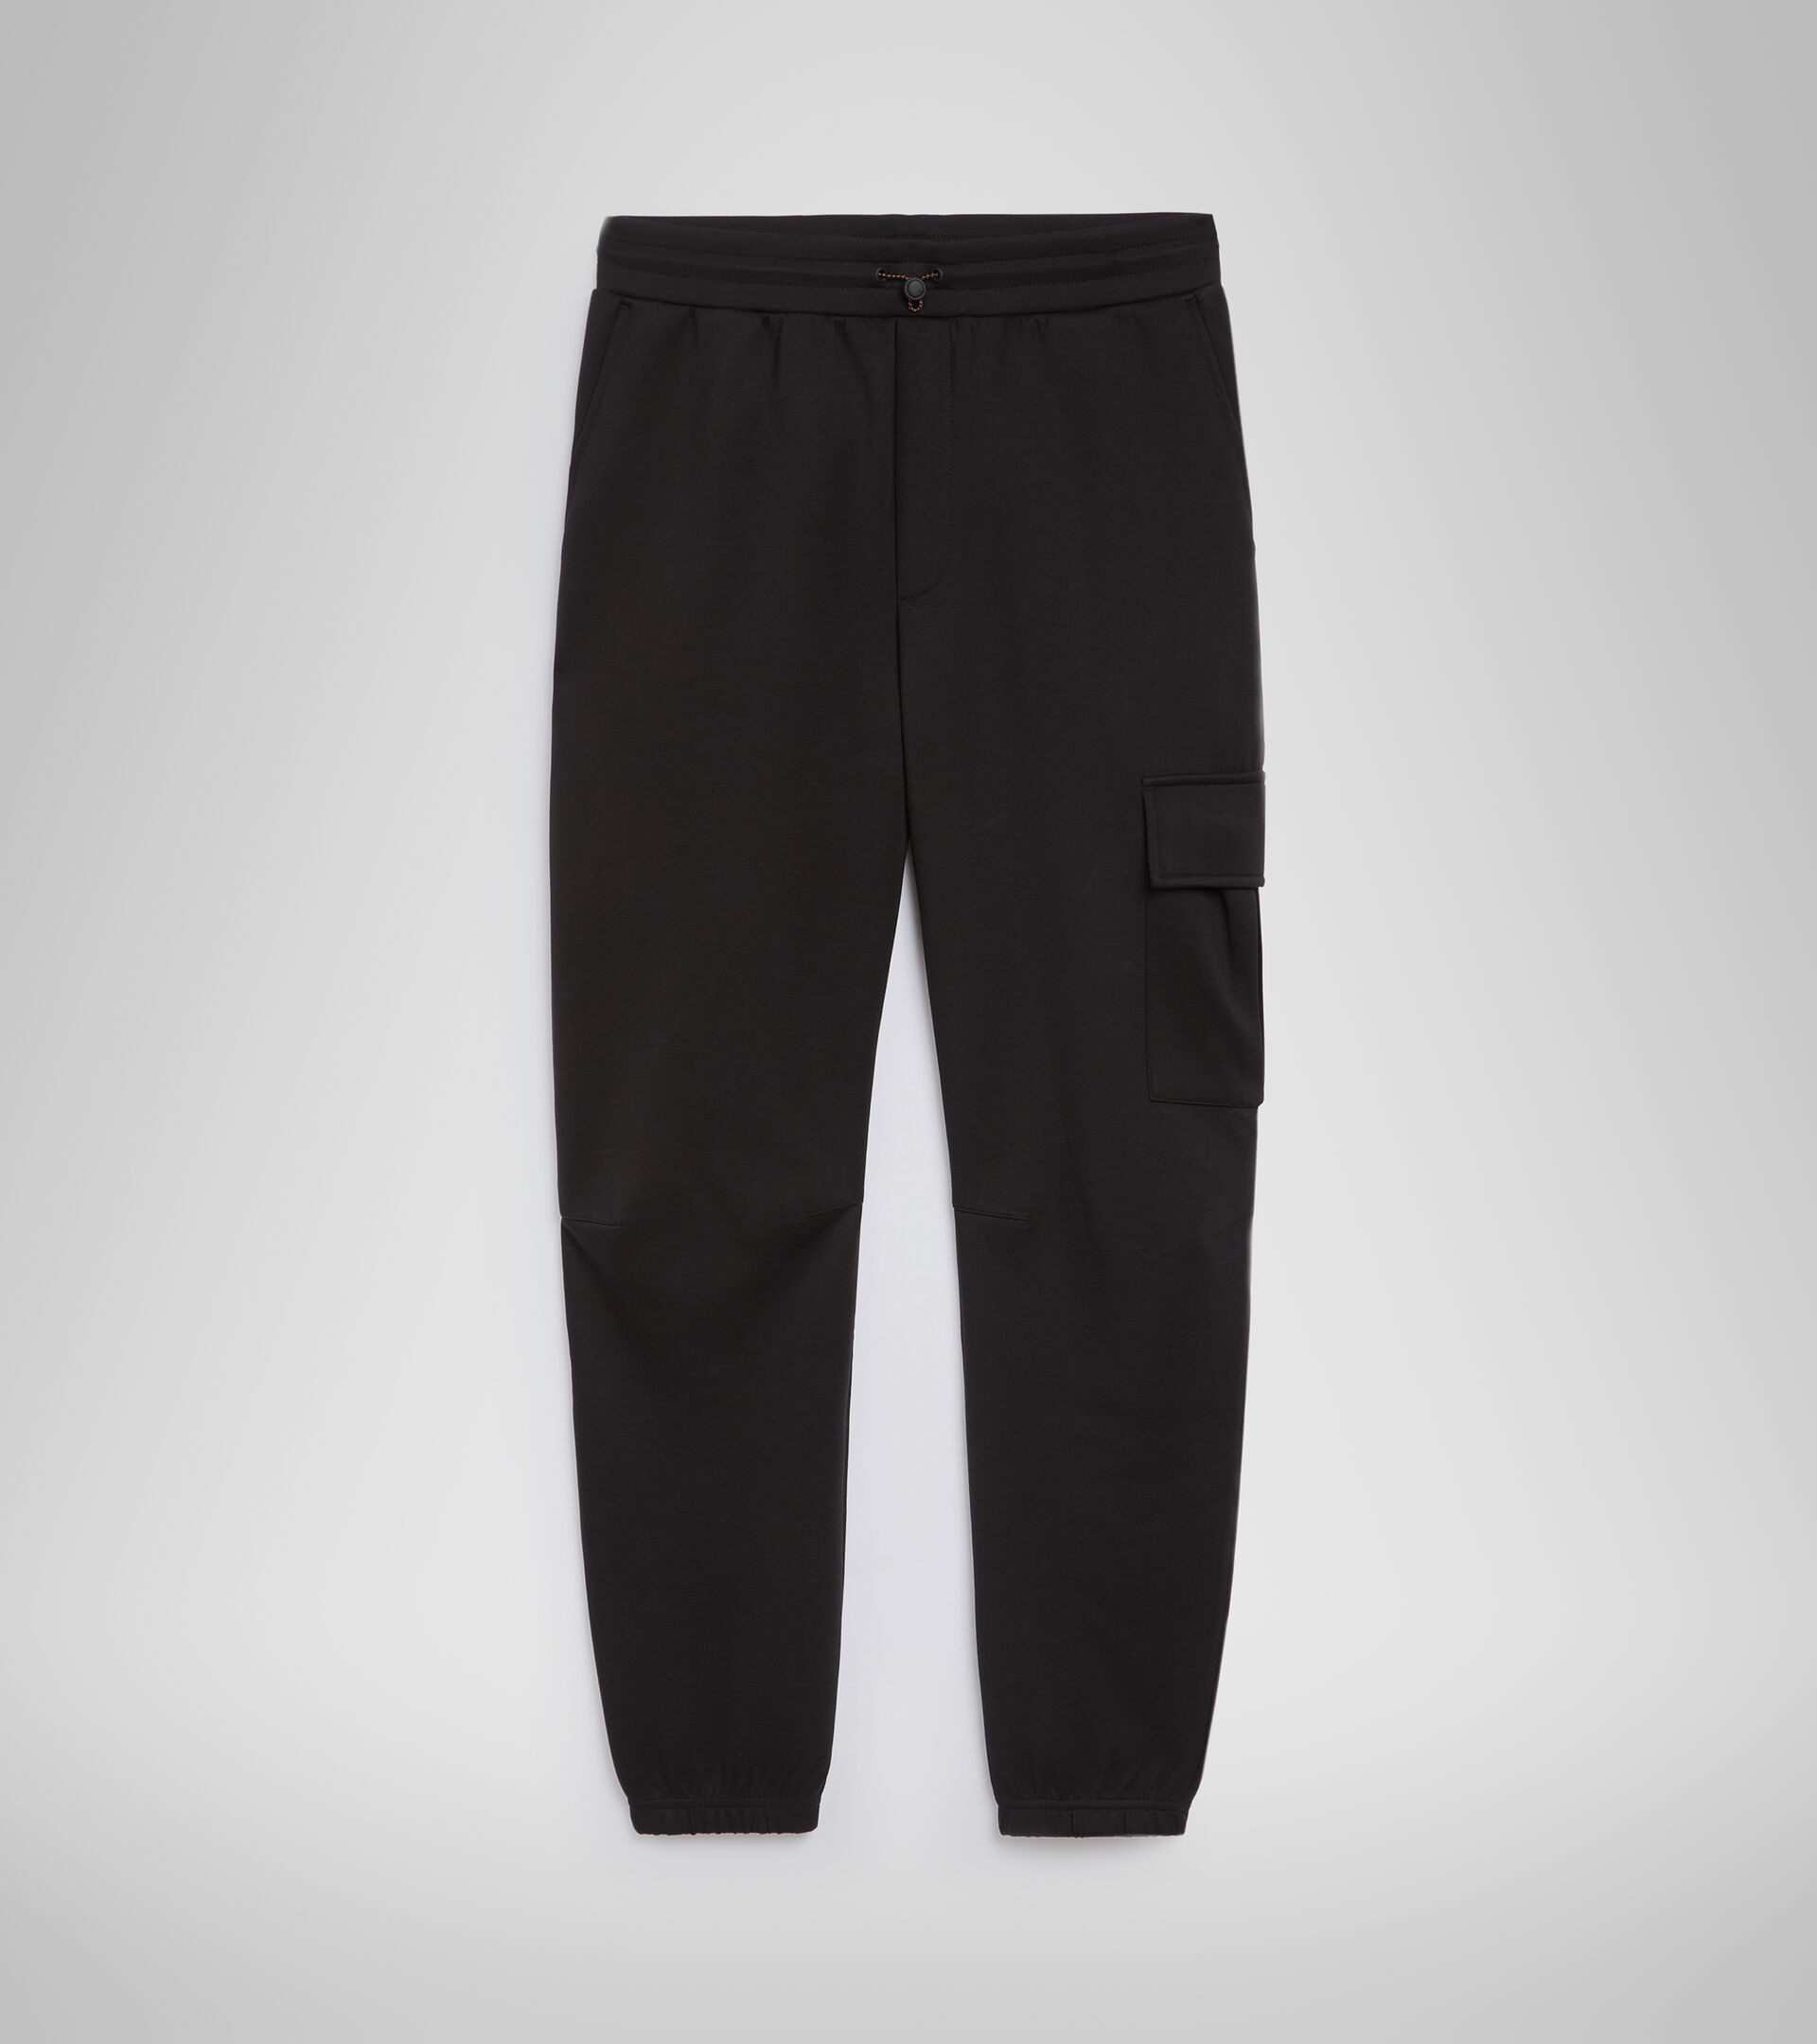 Sports trousers - Men  PANT URBANITY BLACK - Diadora